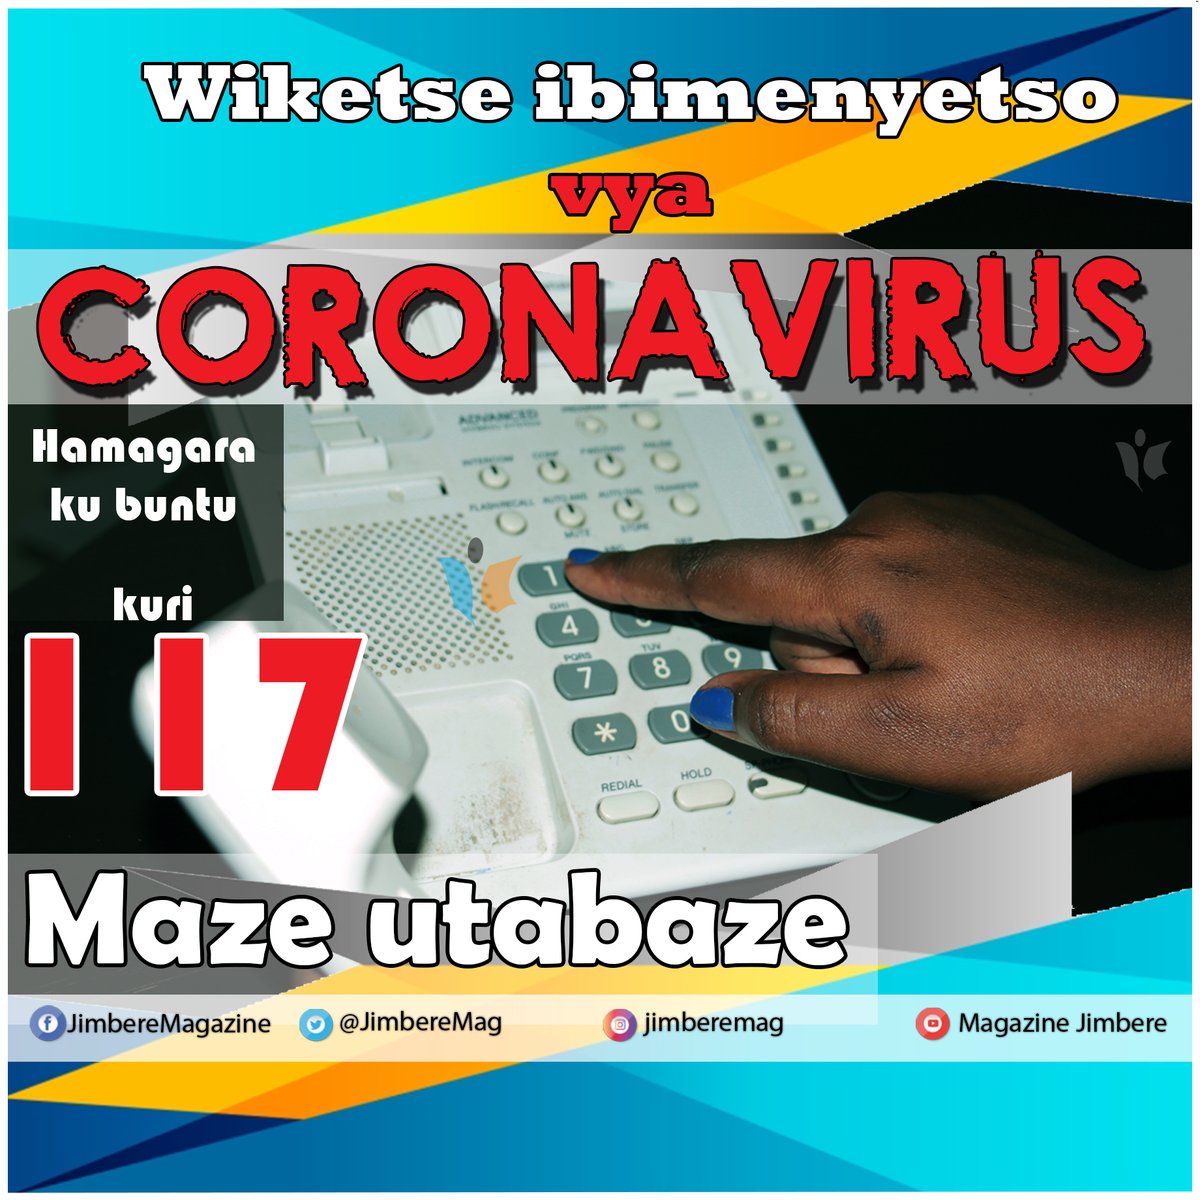  Numéro vert au  #Burundi pour alerter sur un/des cas de  #coronavirus: le 117 #CoronaVirusUpdate